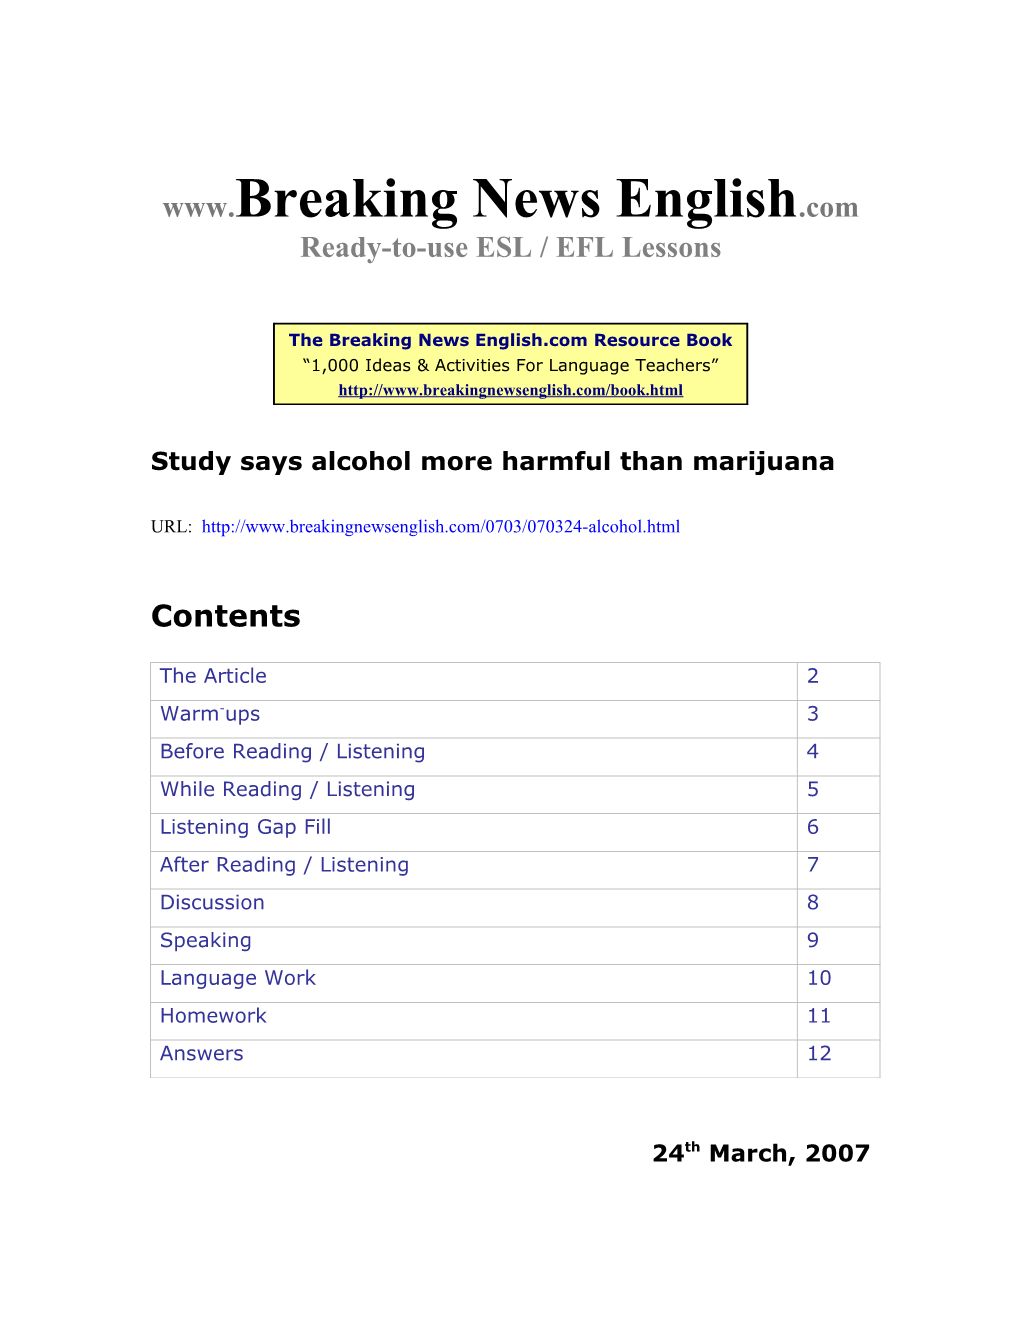 Study Says Alcohol More Harmful Than Marijuana